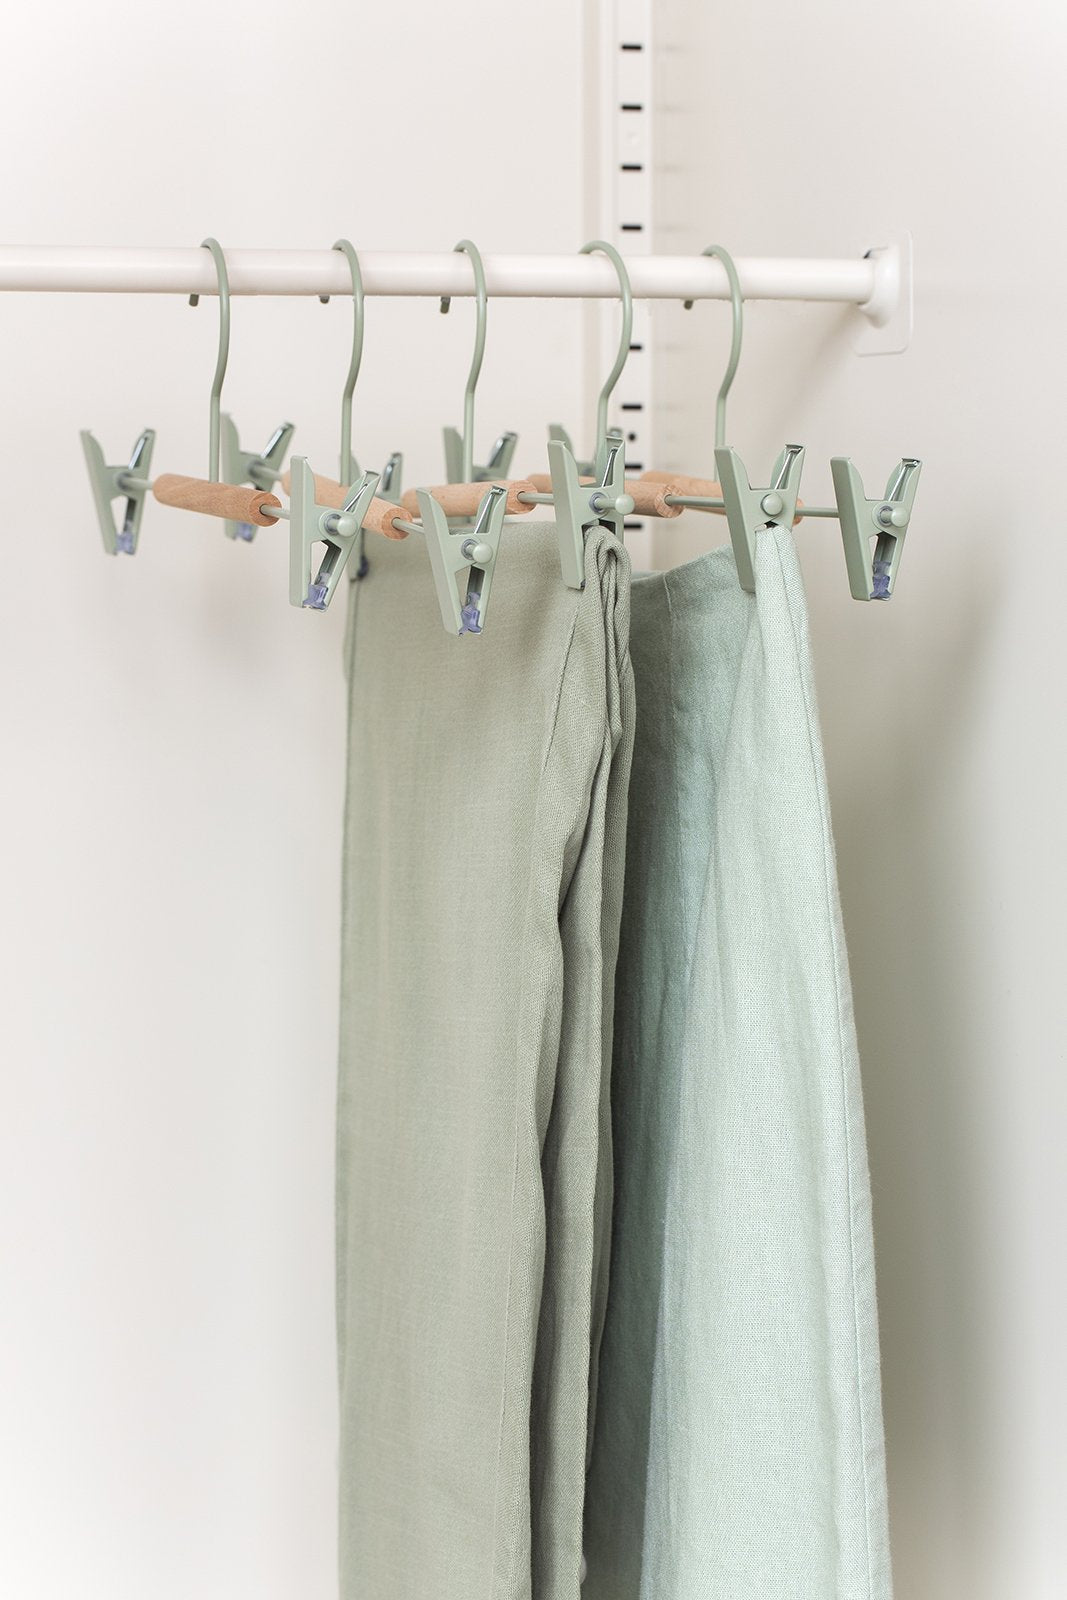 Adult Clippy Hangers- Choose your colour